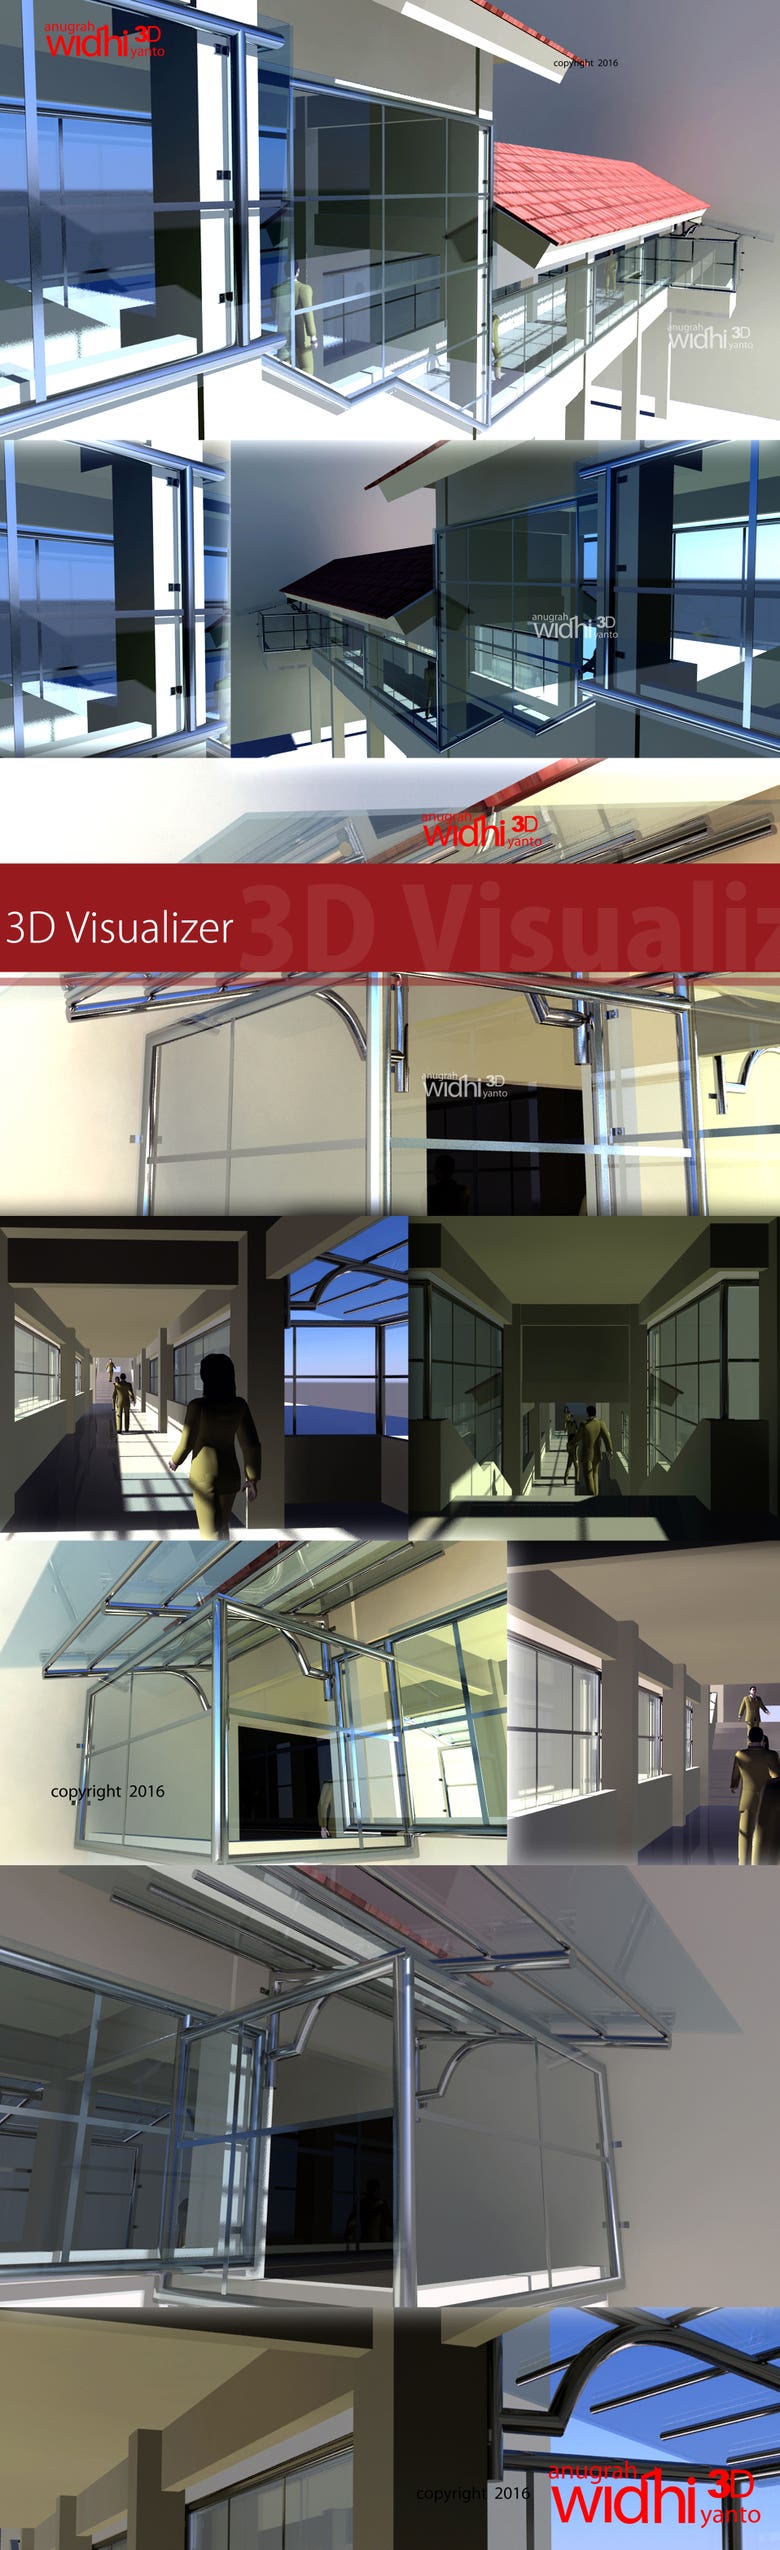 3D Visualizer